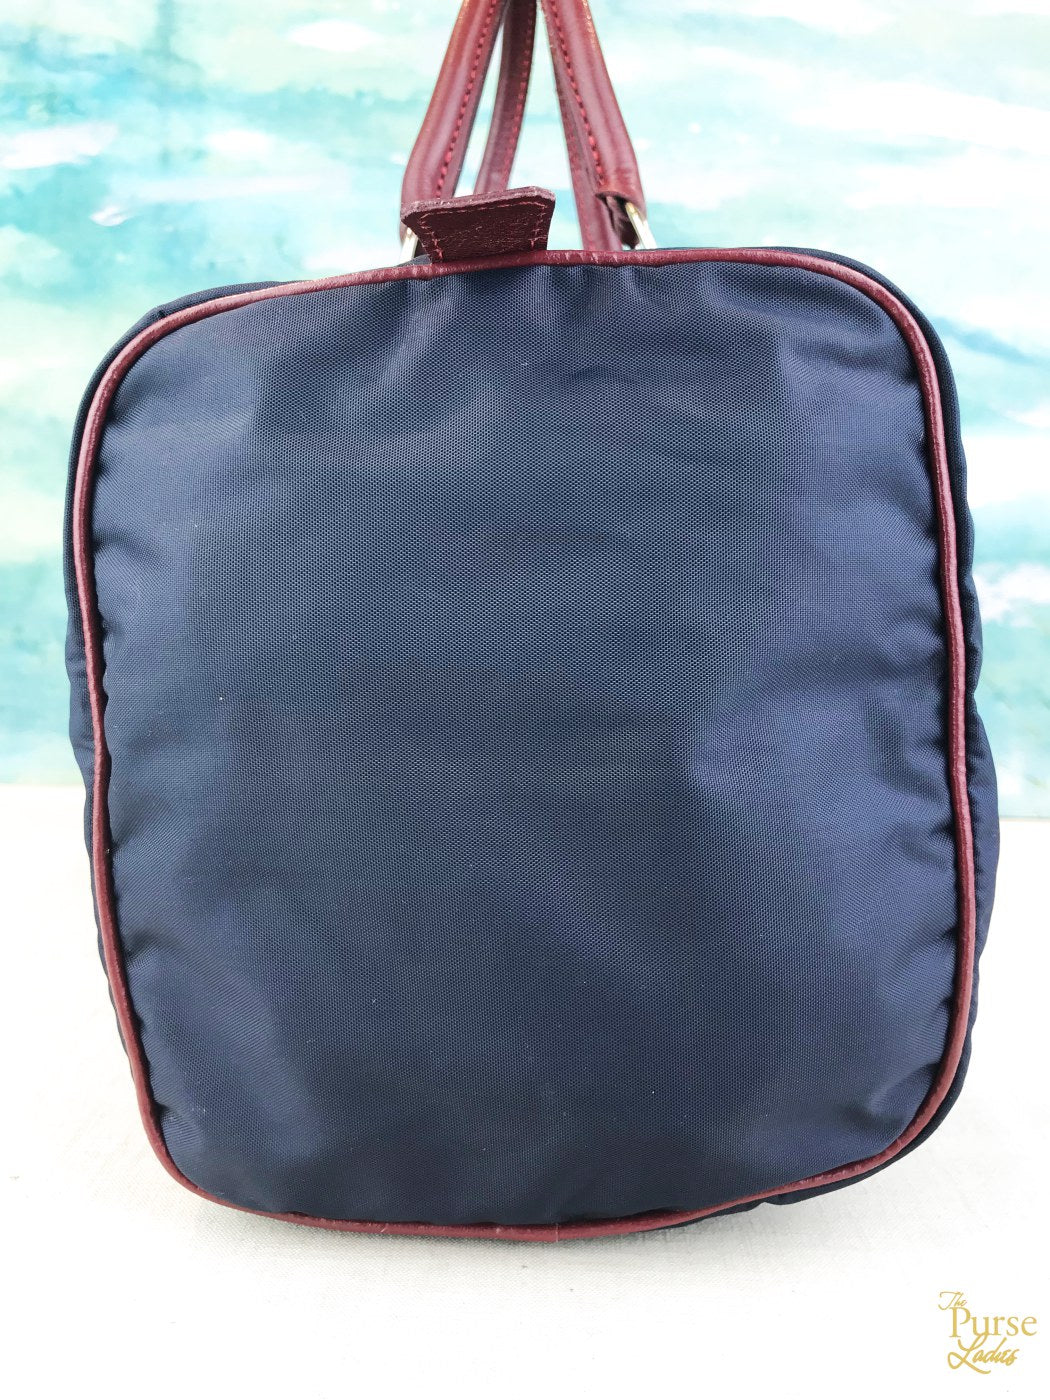 LONGCHAMP Navy Blue Nylon Maroon Leather Handbag Satchel Bag SALE! | eBay